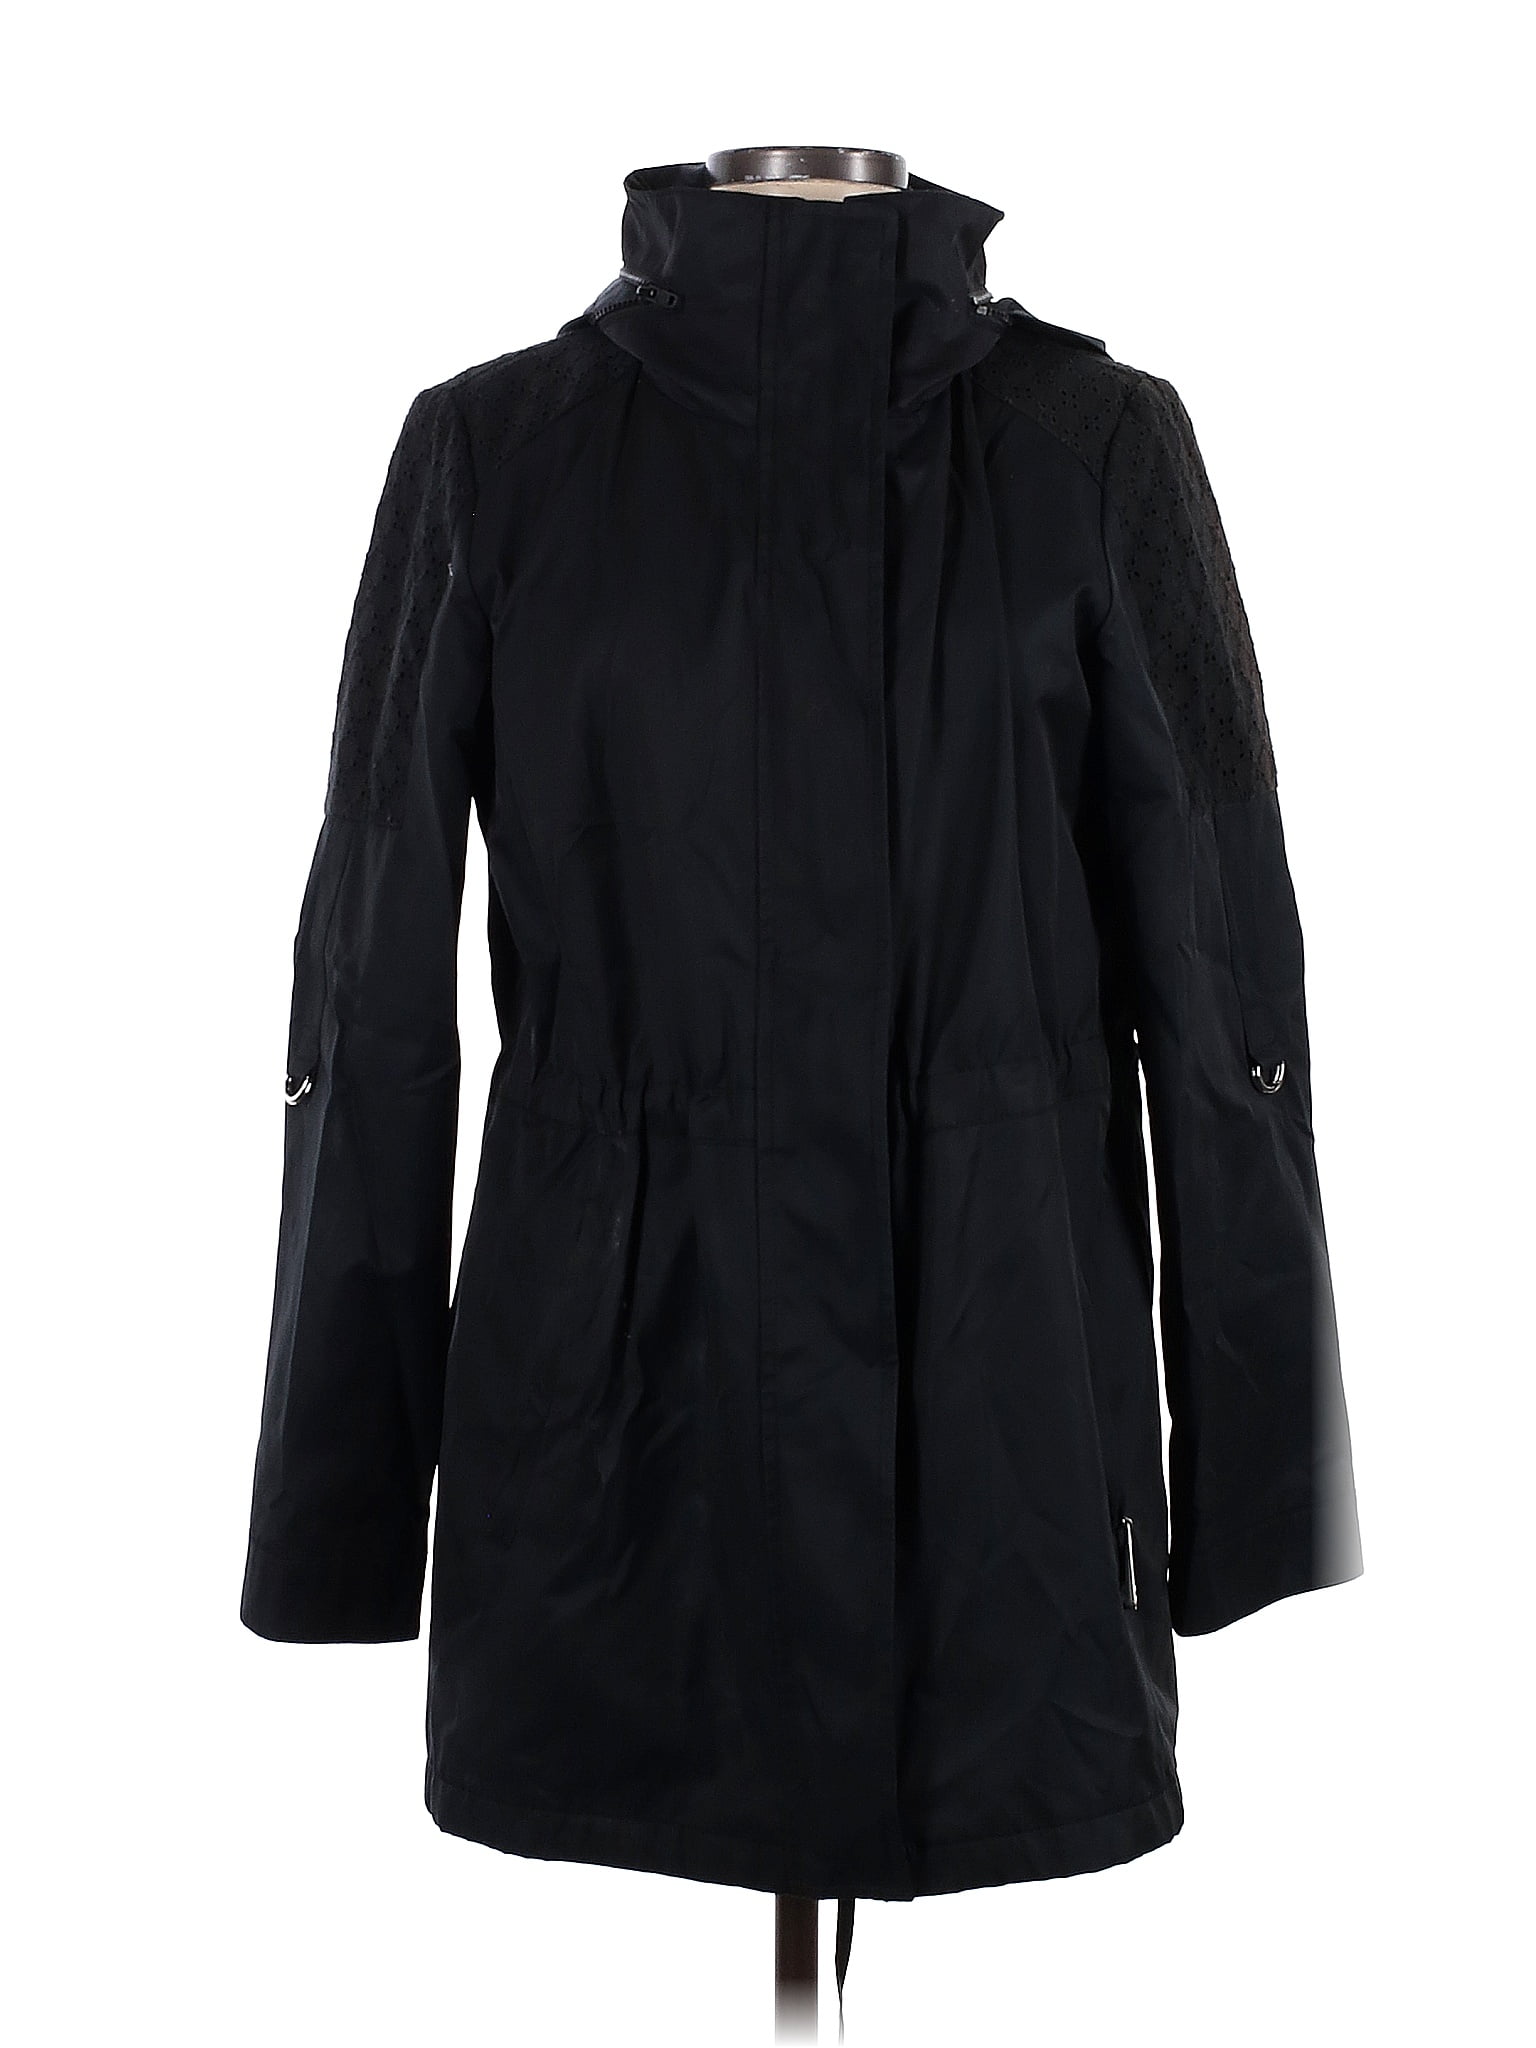 Betsey Johnson Solid Black Coat Size M - 71% off | thredUP